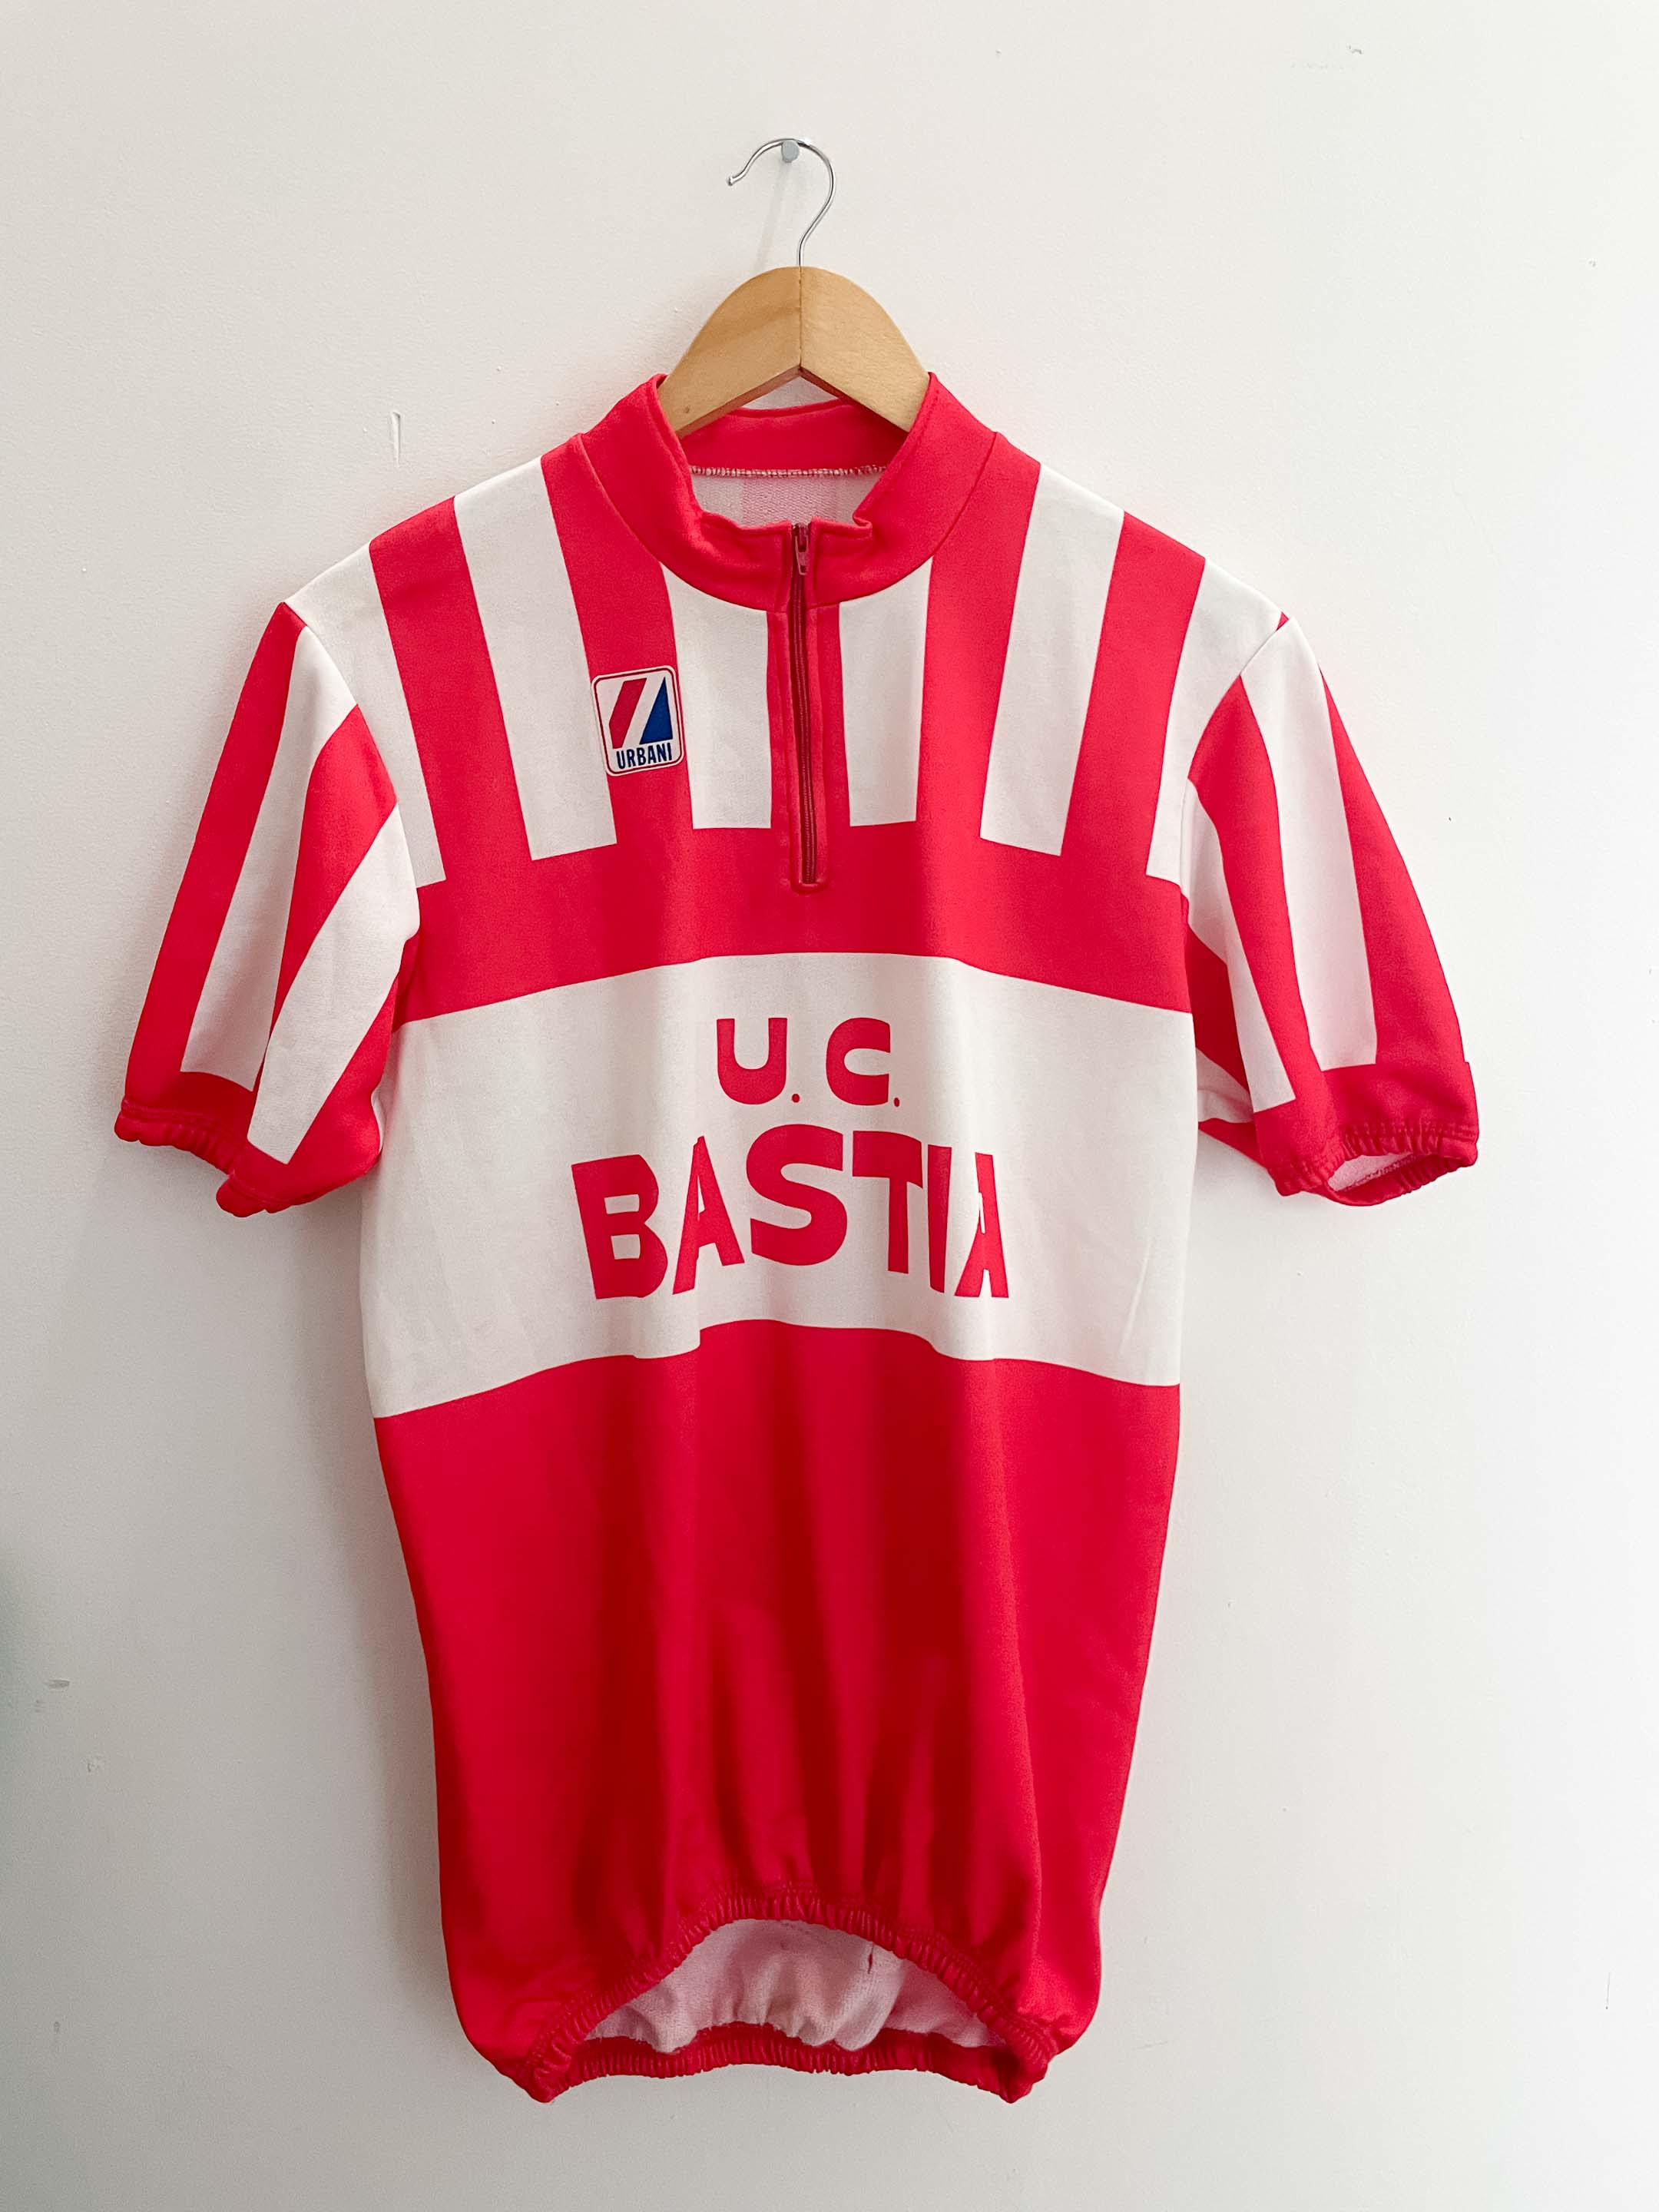 Vintage red U.C Bastia large jersey top